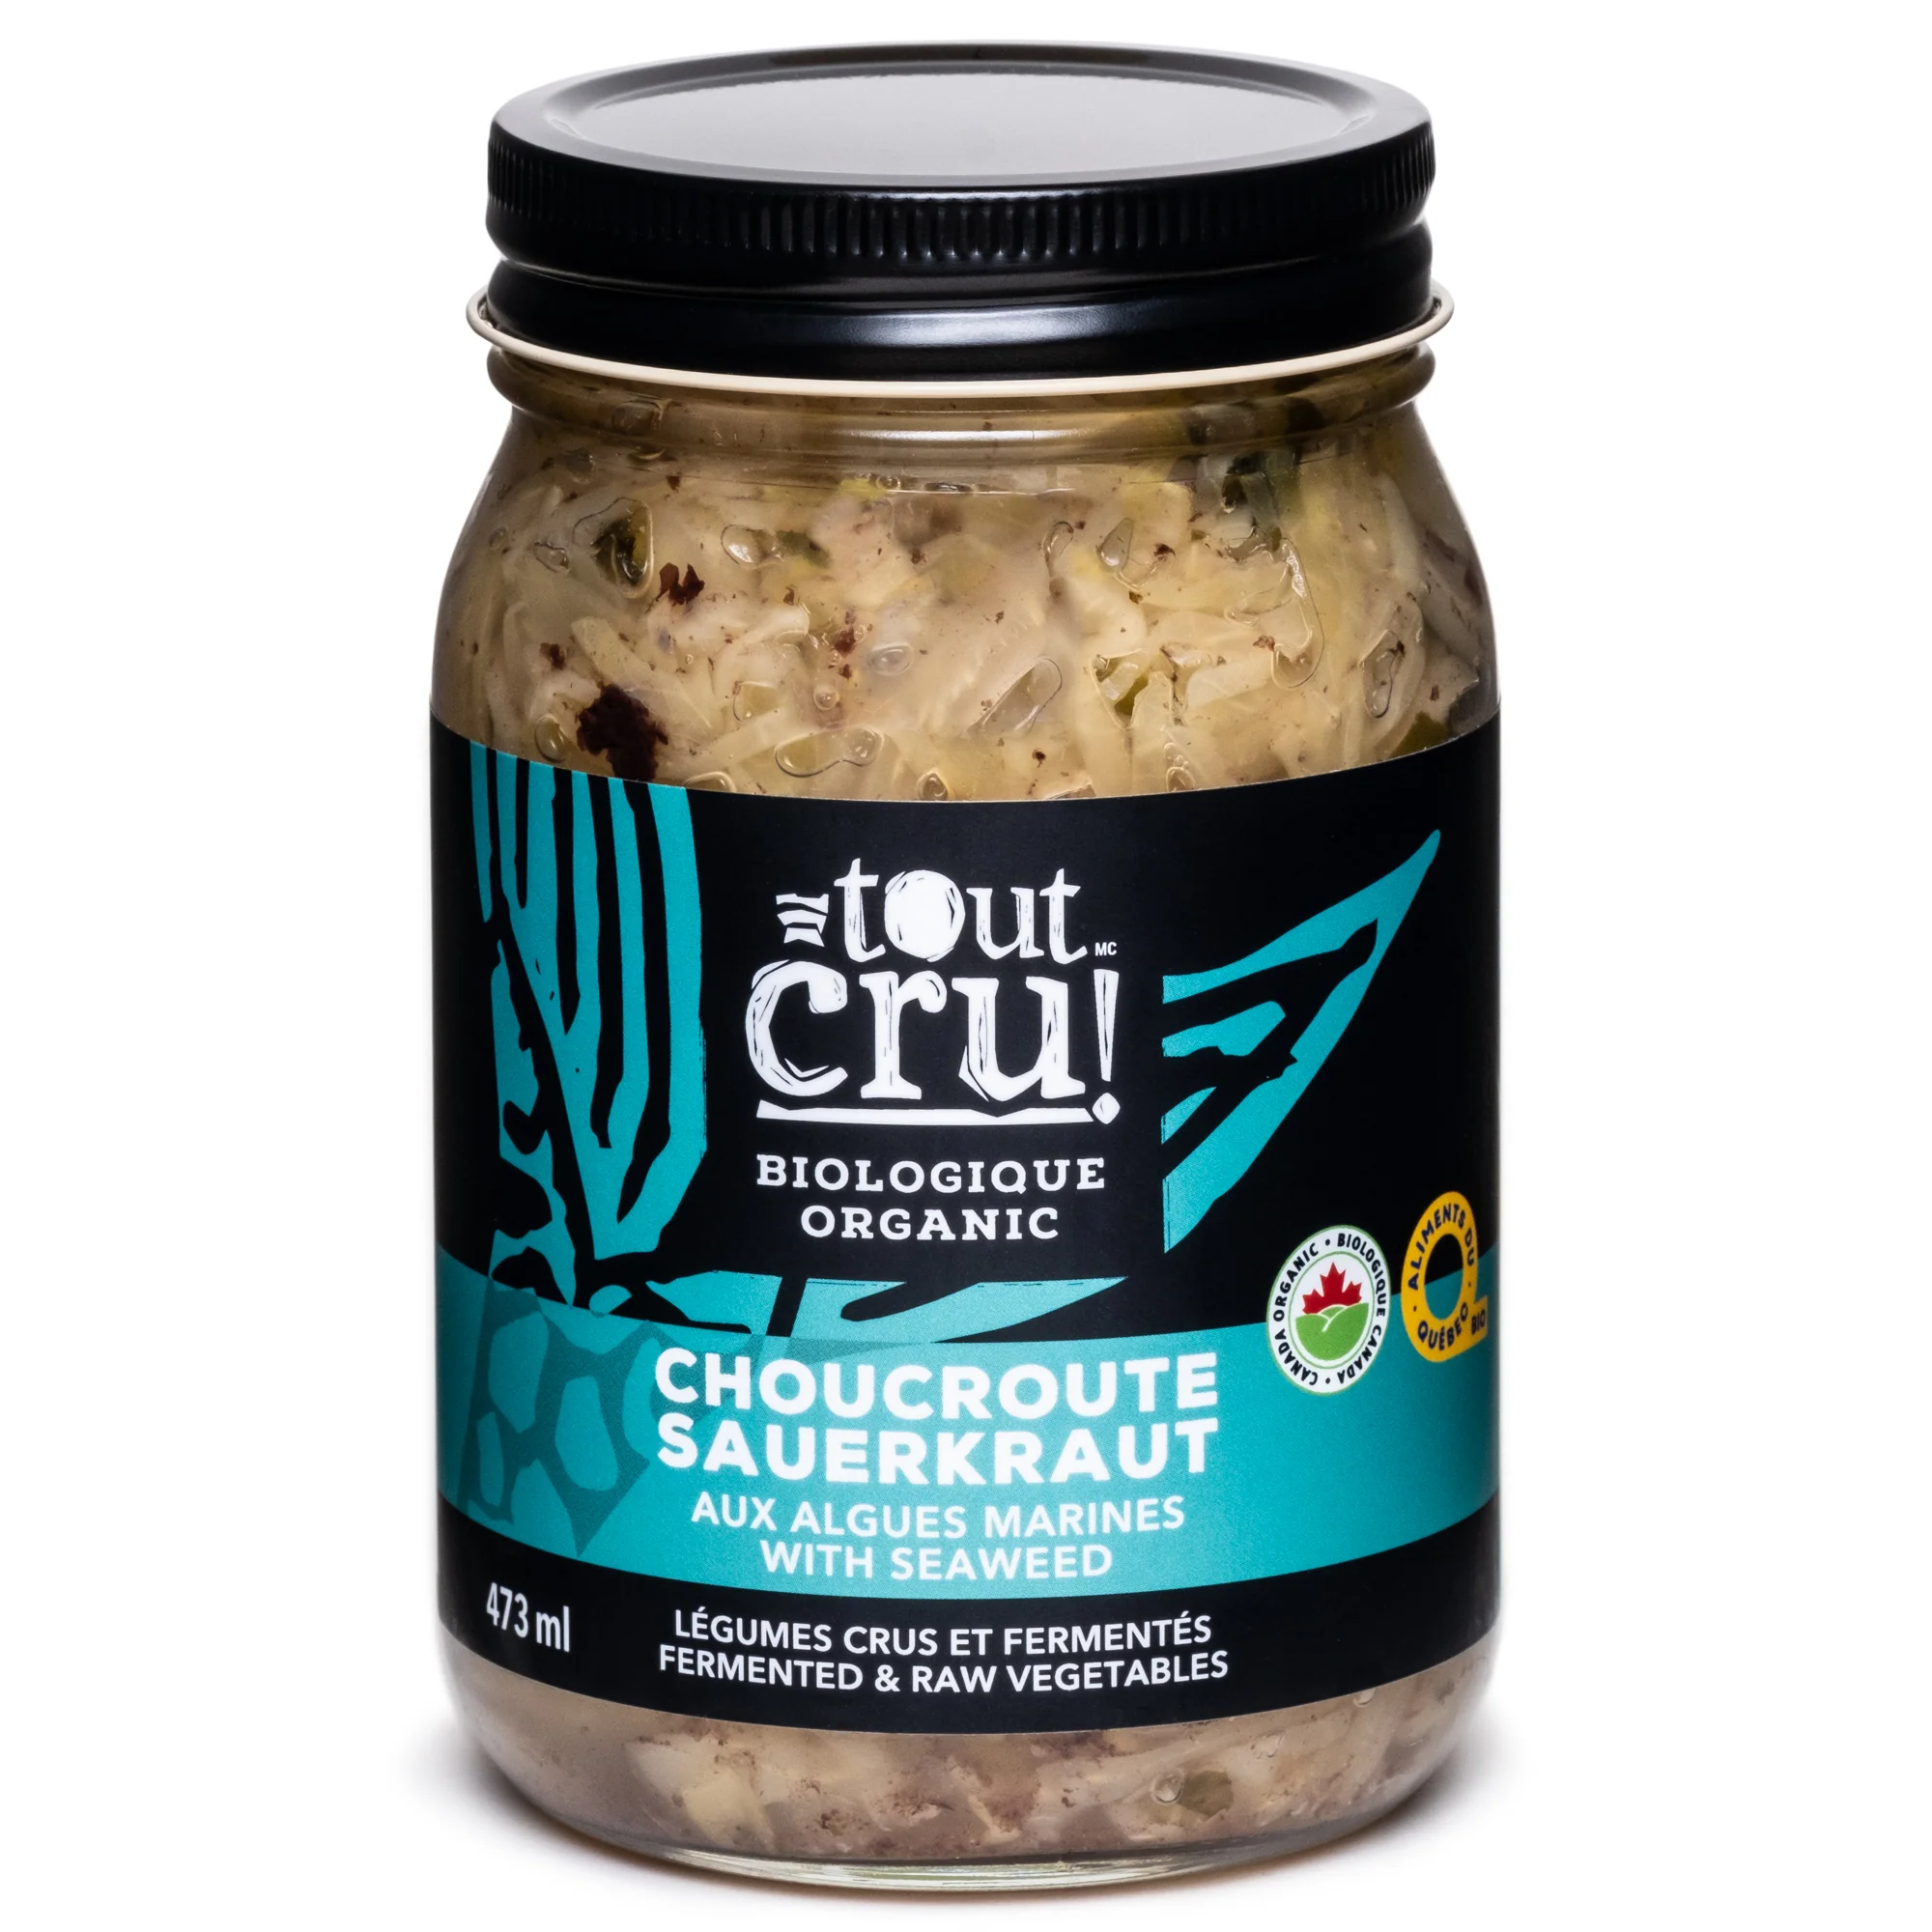 Organic seaweed sauerkraut - Sirena - Tout cru! Fermentation